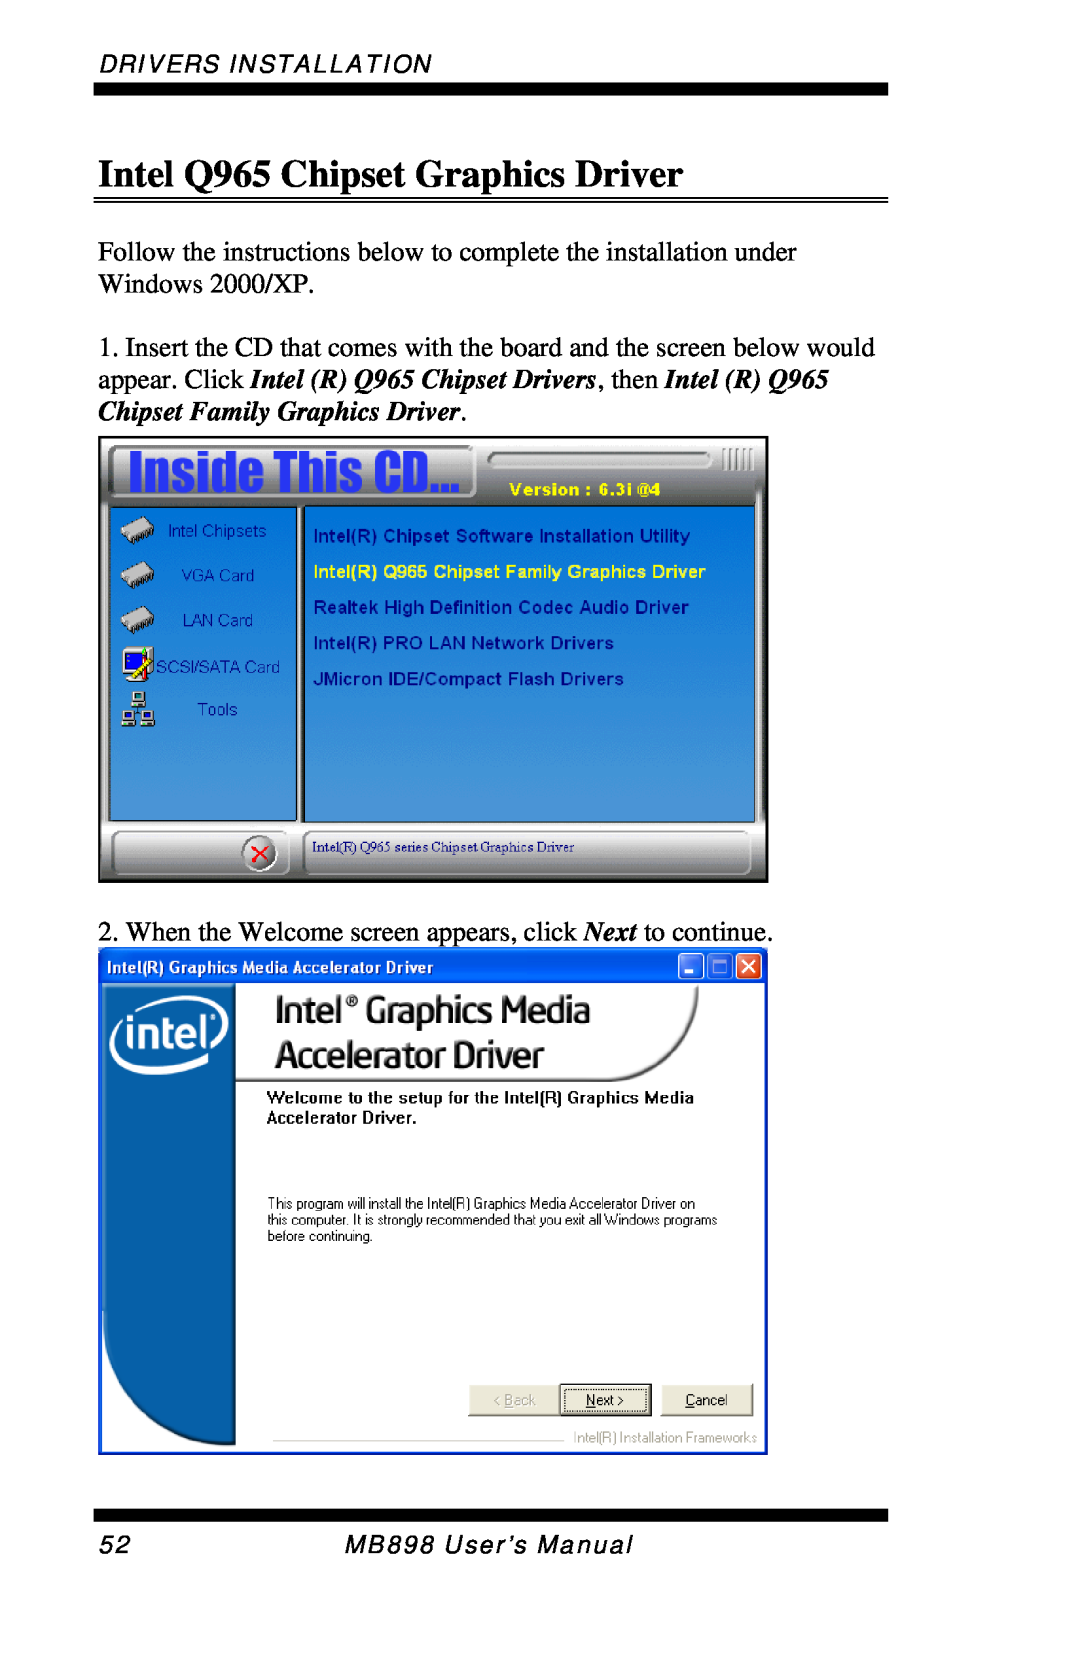 Intel MB898F, MB898RF user manual Intel Q965 Chipset Graphics Driver, Drivers Installation, MB898 User’s Manual 